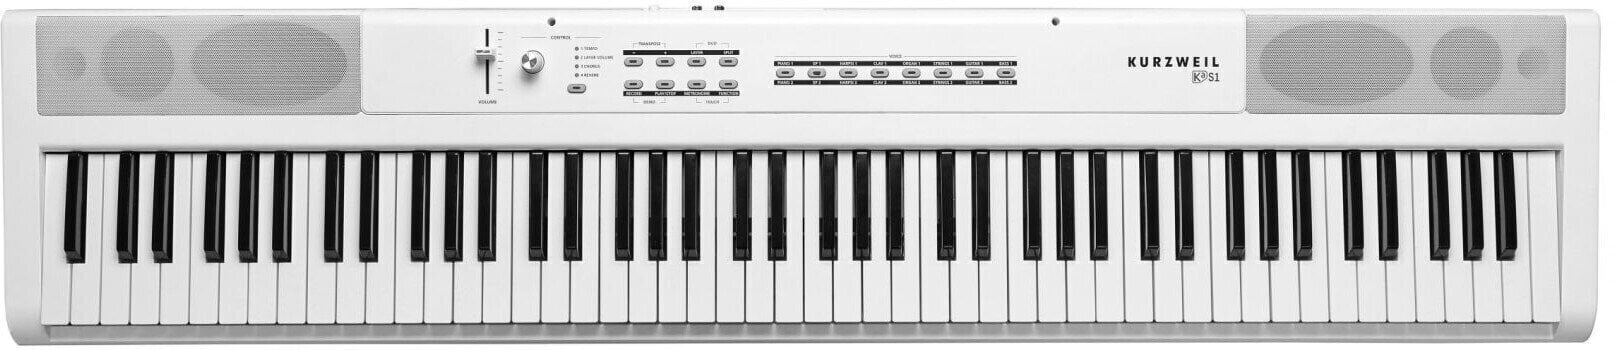 Cyfrowe stage pianino Kurzweil Ka S1 Cyfrowe stage pianino